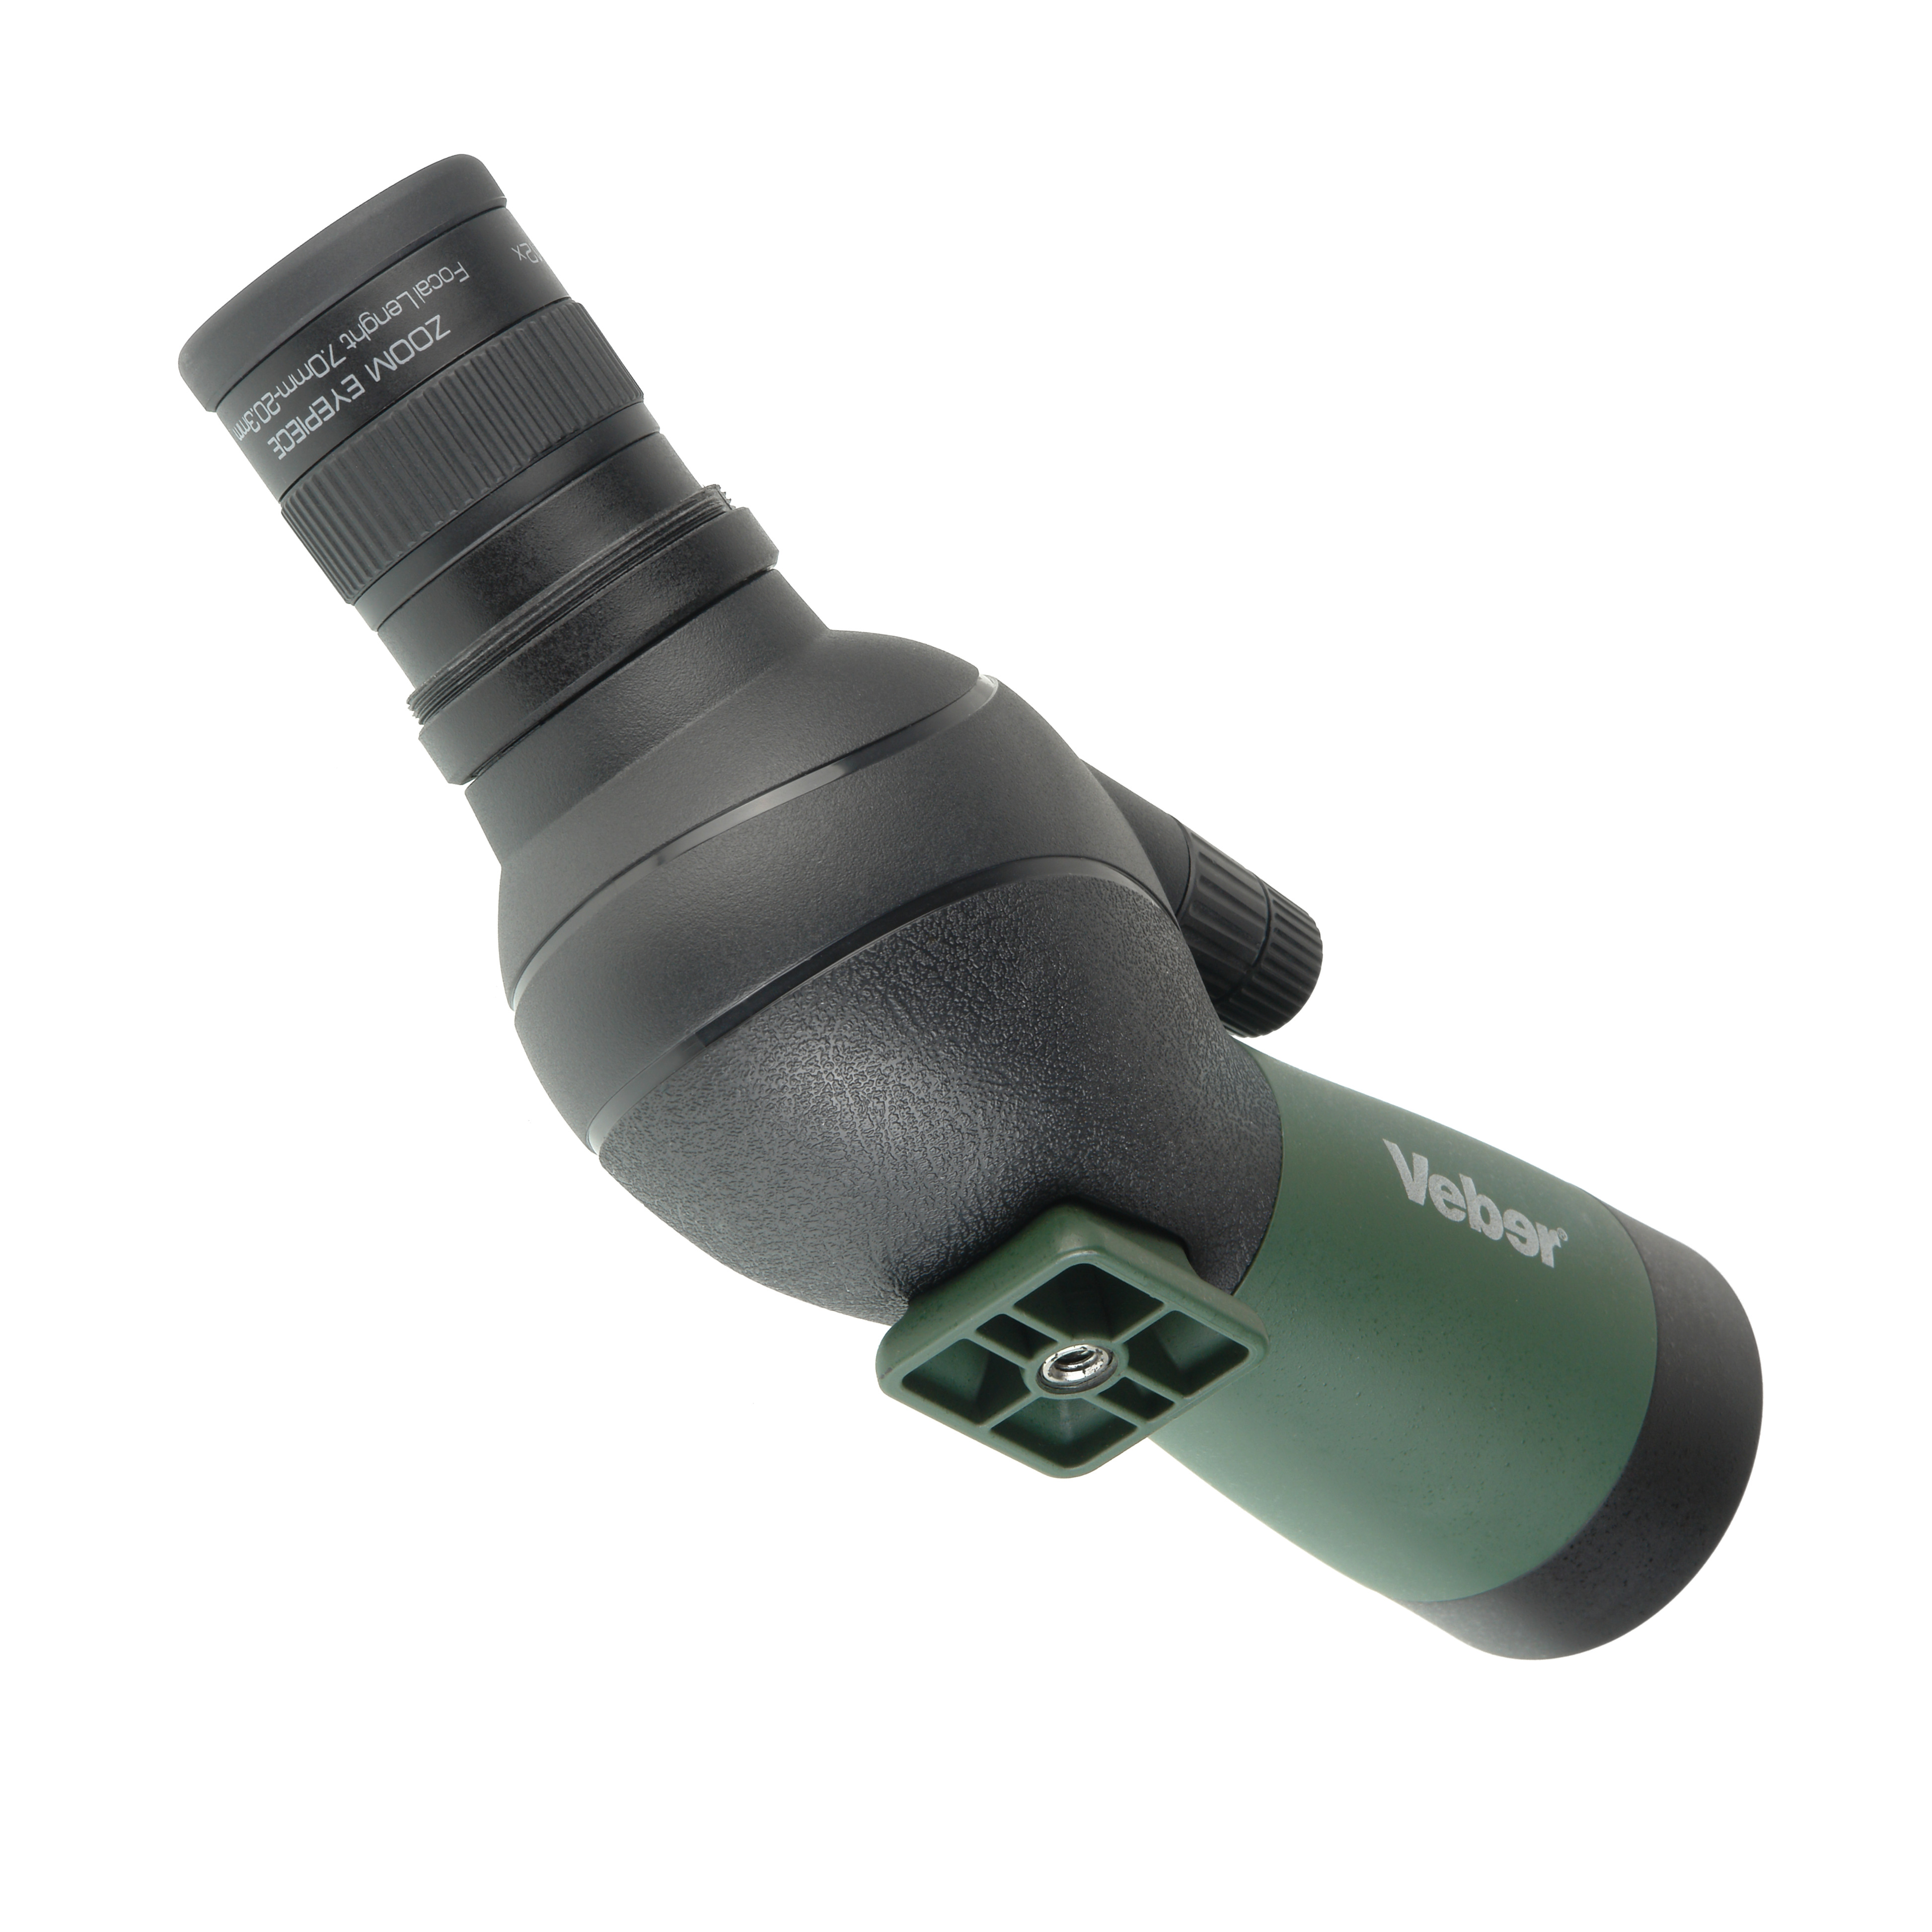    Veber Snipe 12-36x50 GR Zoom   Ultra-mart